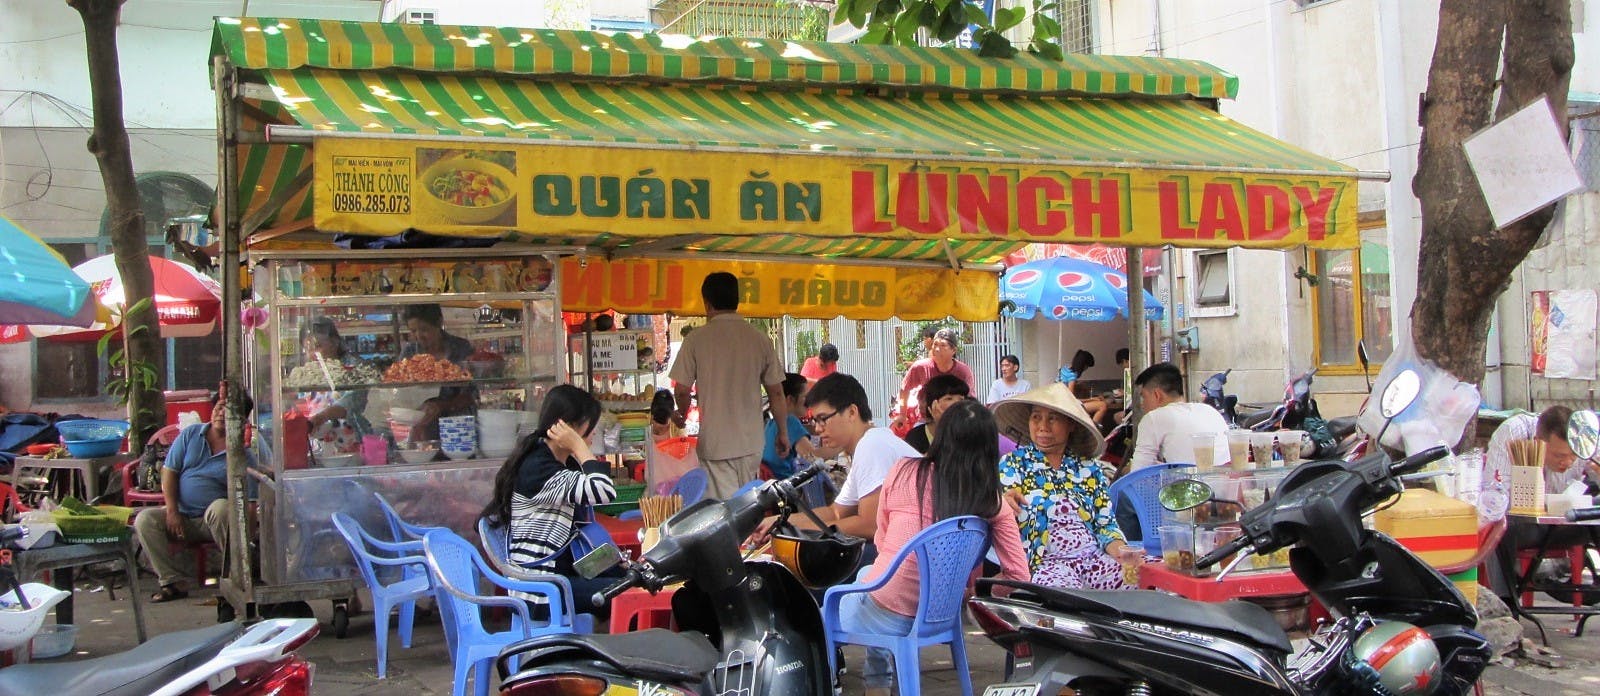 The Lunch Lady, Saigon: A Diary